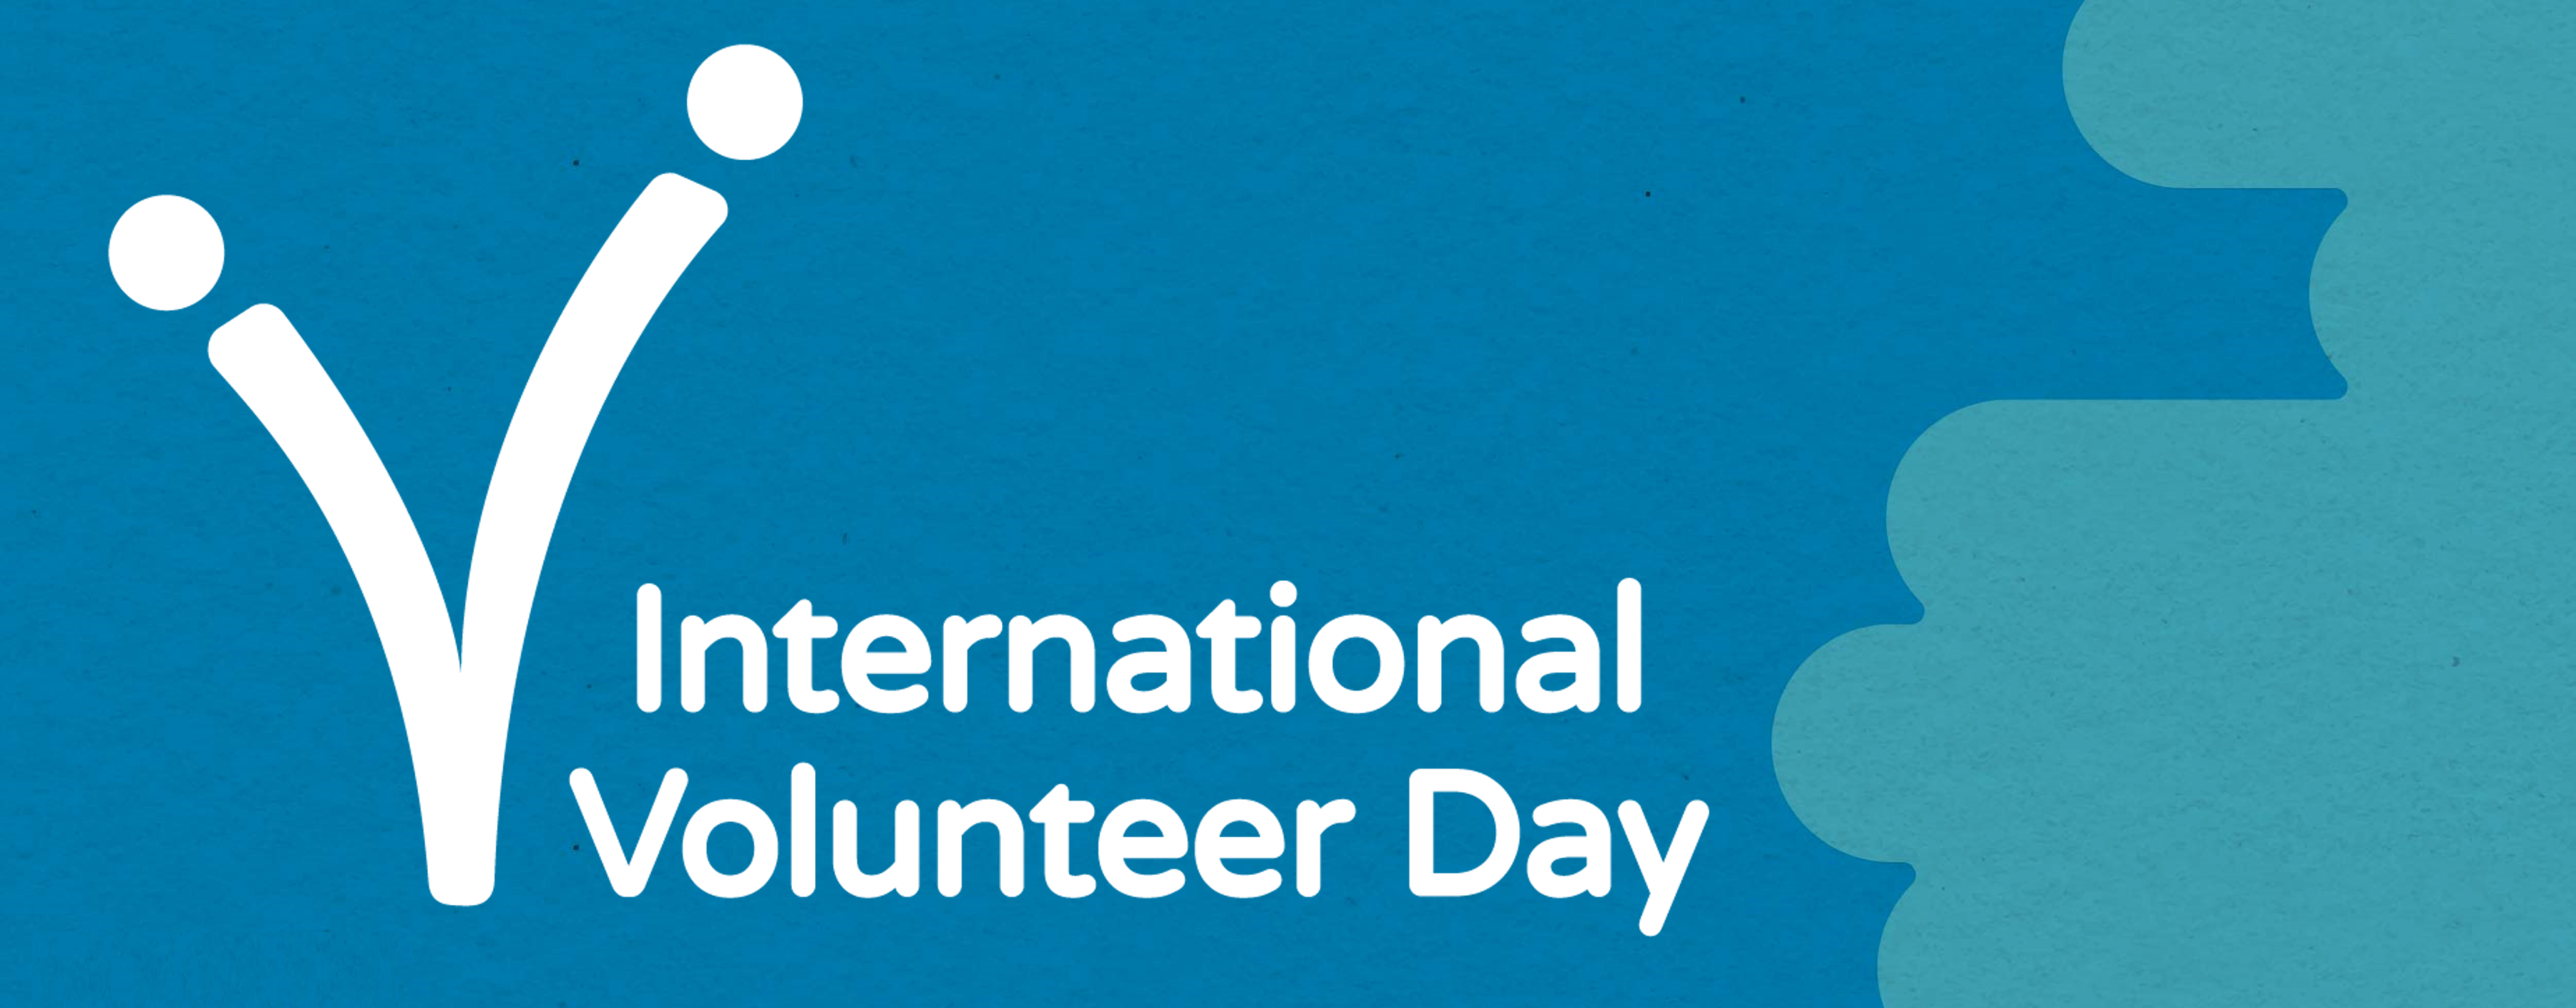 International Volunteer Day 2021 Meet Henkel Employees Making a Difference